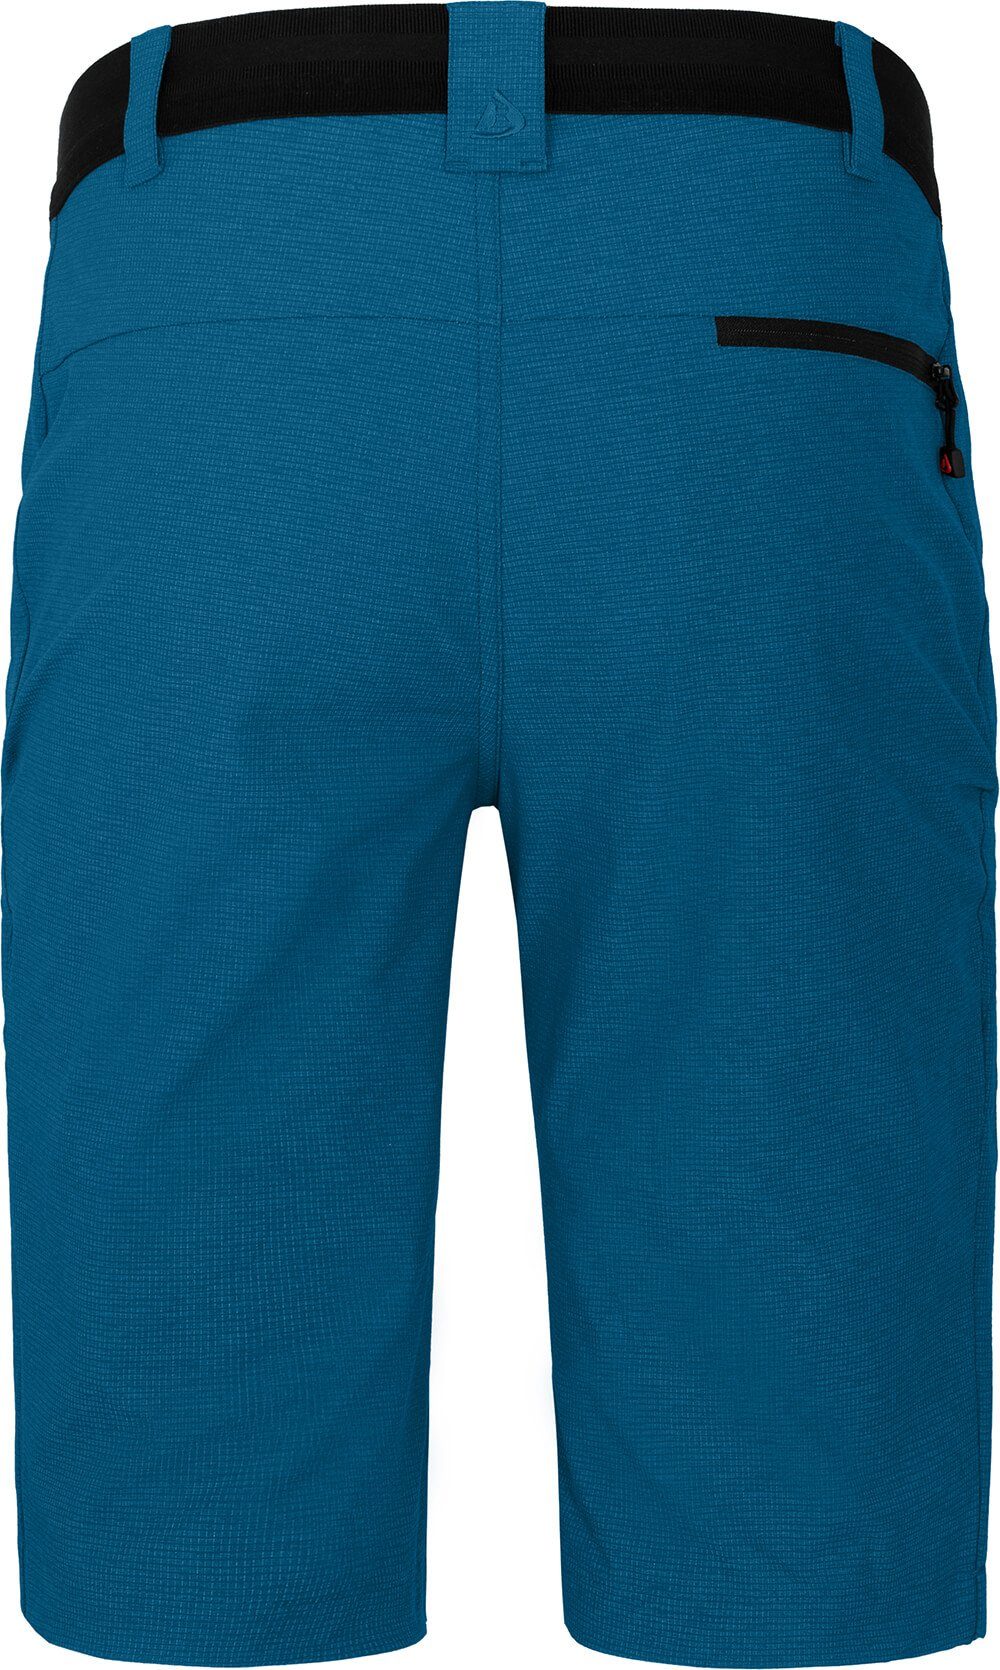 Normalgrößen, Bermuda Saphir blau Wandershorts, Bergson Herren robust, elastisch, LEBIKO Outdoorhose